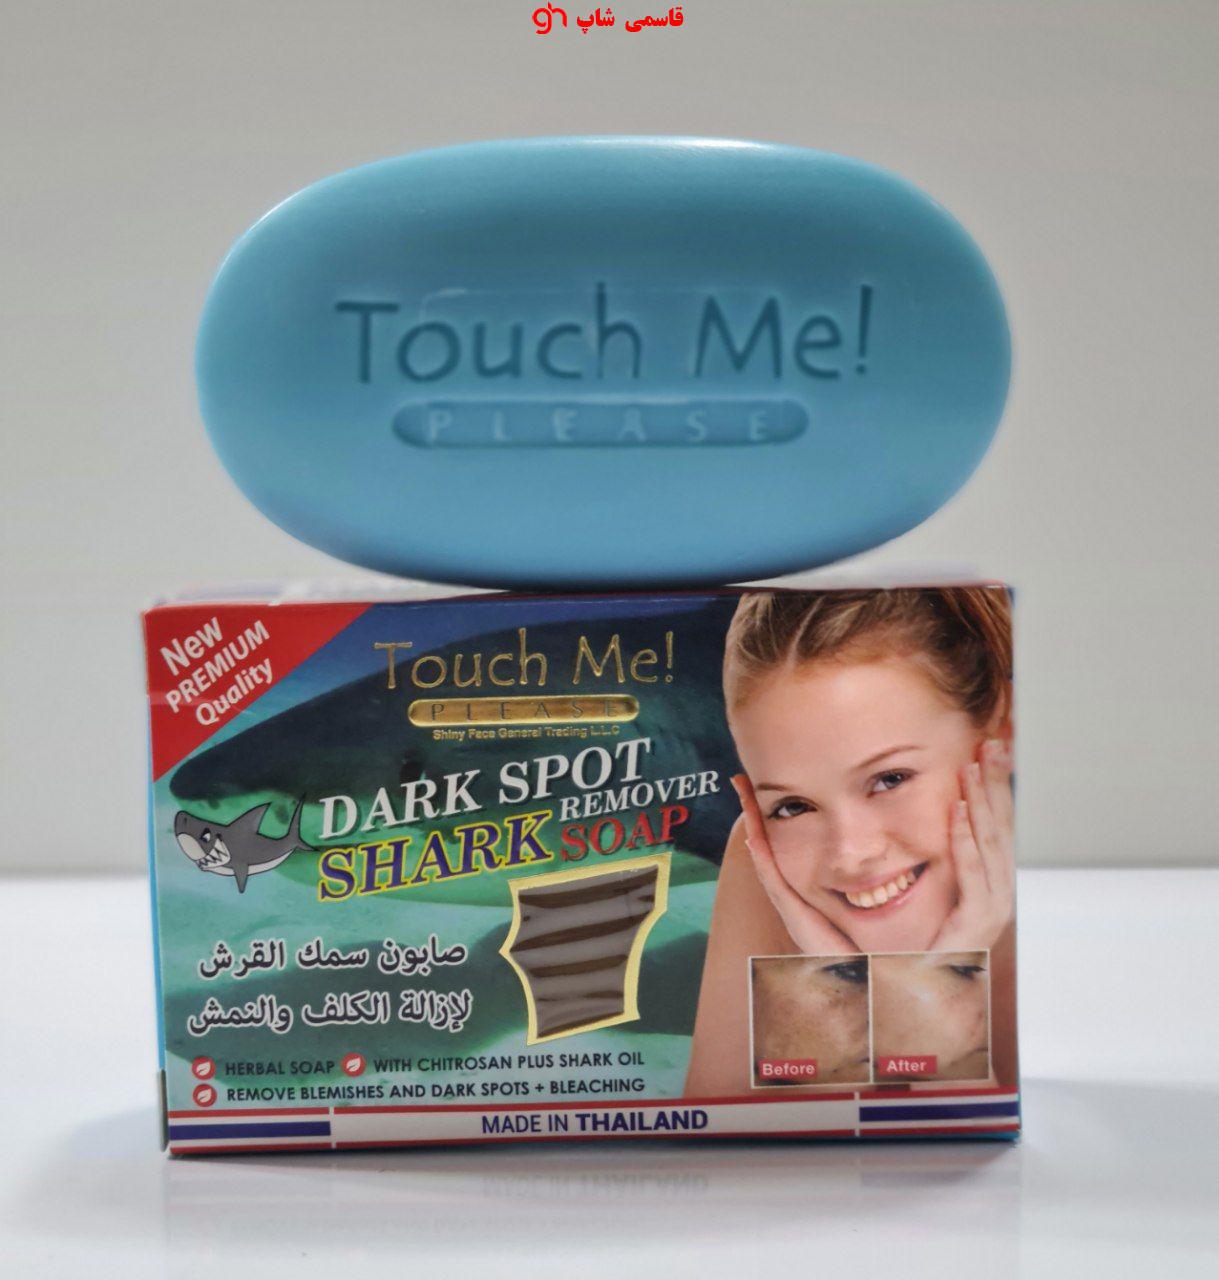 صابون کوسه تاچ می Touch Me: ضد لک و سفید کننده Touch Me SHARK Soap